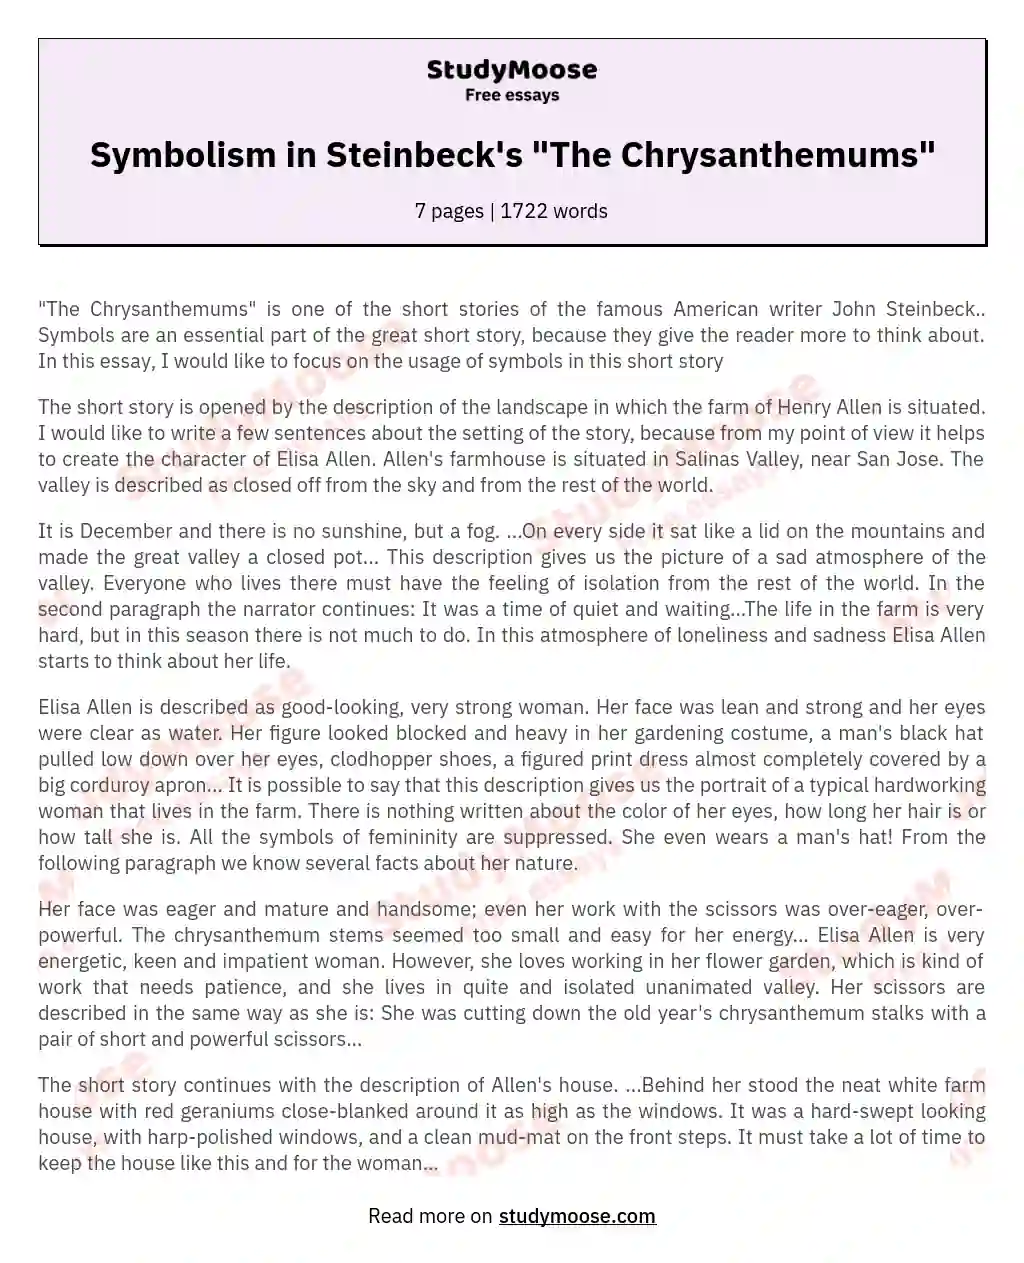 john steinbeck short stories chrysanthemums